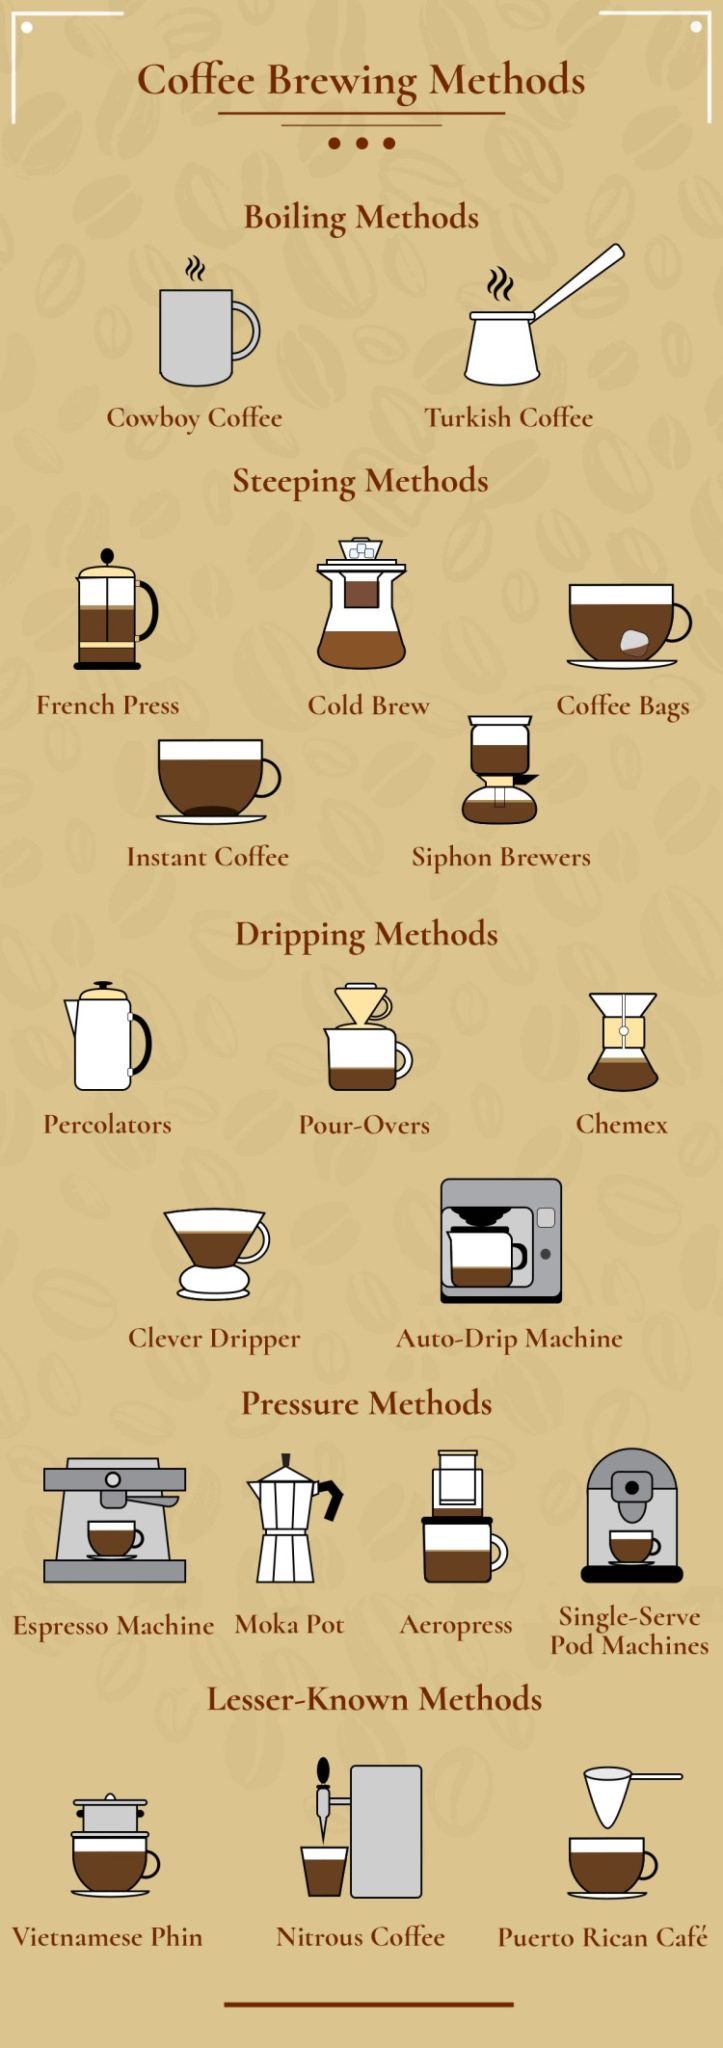 Coffeeaffection.com Coffee brewing methods